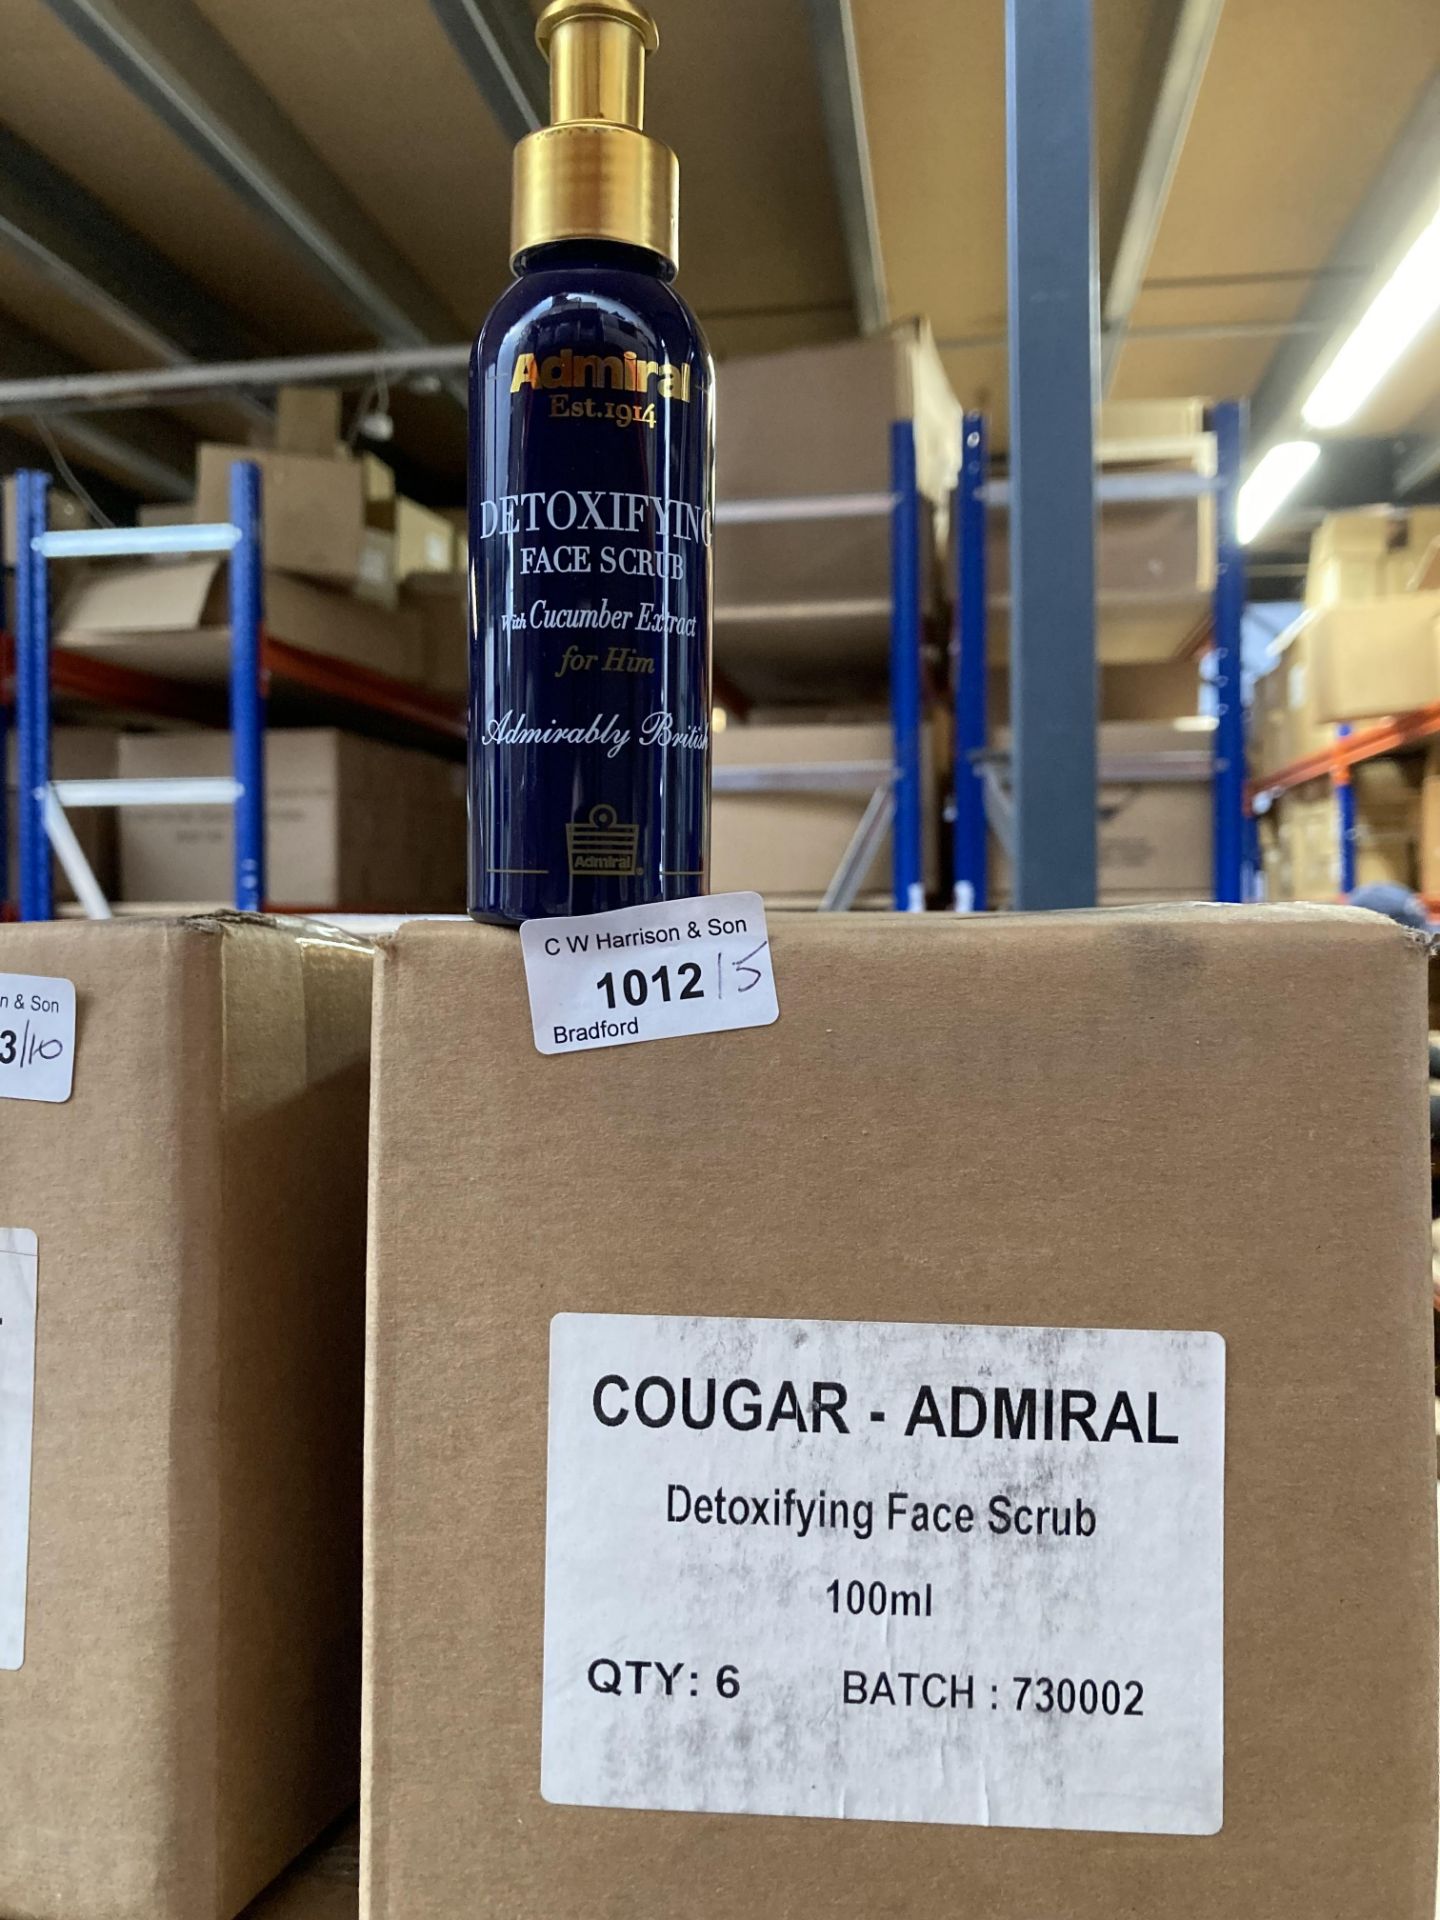 Ten boxes of Cougar/Admiral Detoxifying Face Scrub 100ml (6 units per box)